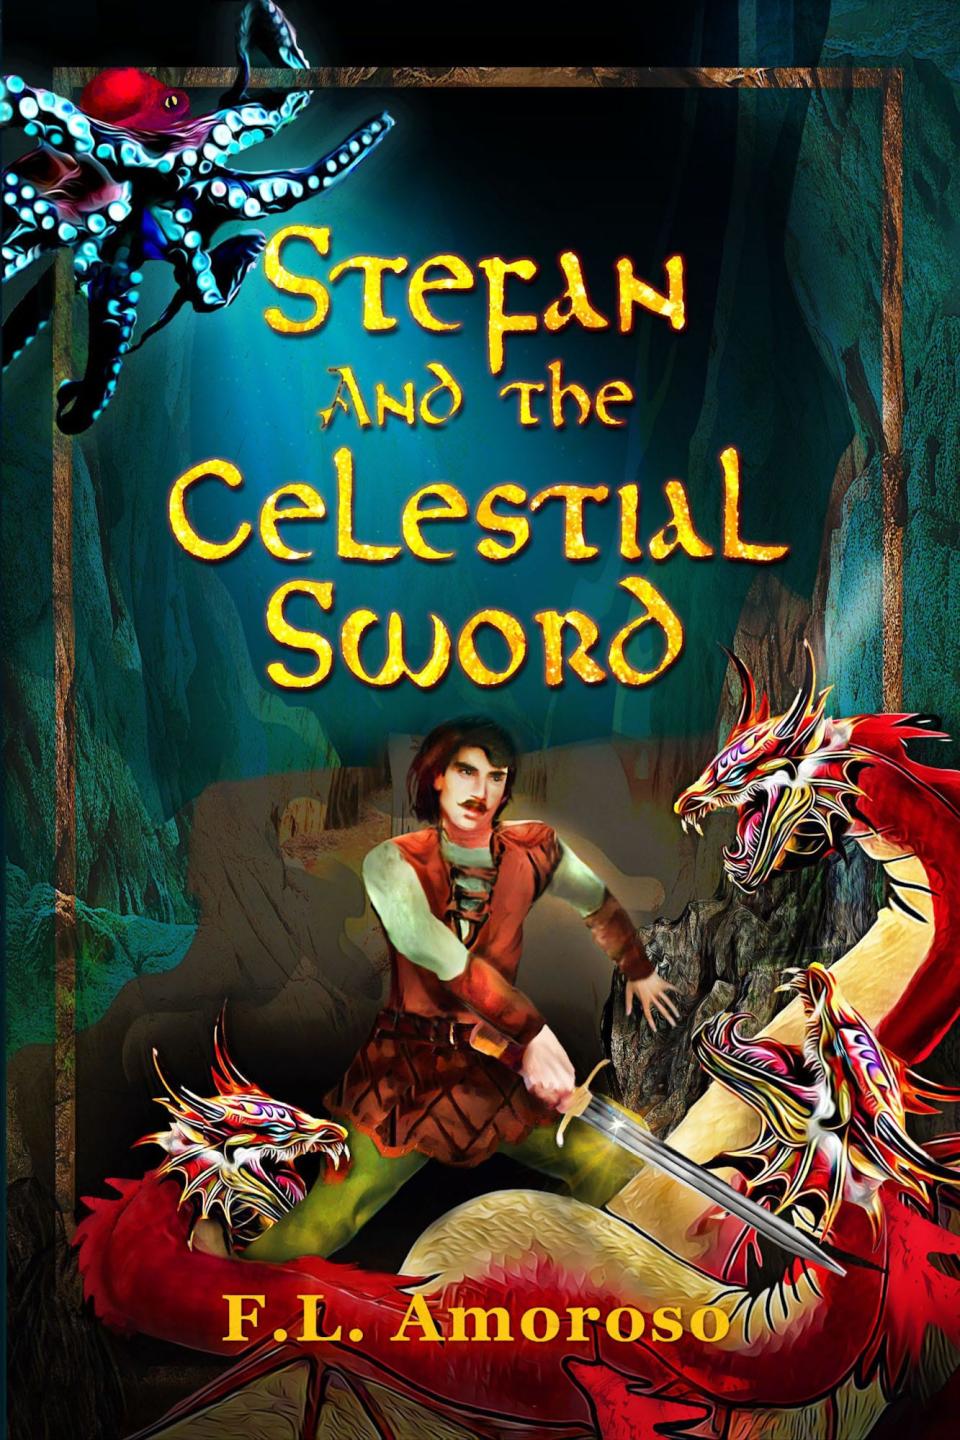 Wilmington author Frank Amoroso's latest book is the fantasy novel "Stefan and the Celestial Sword."